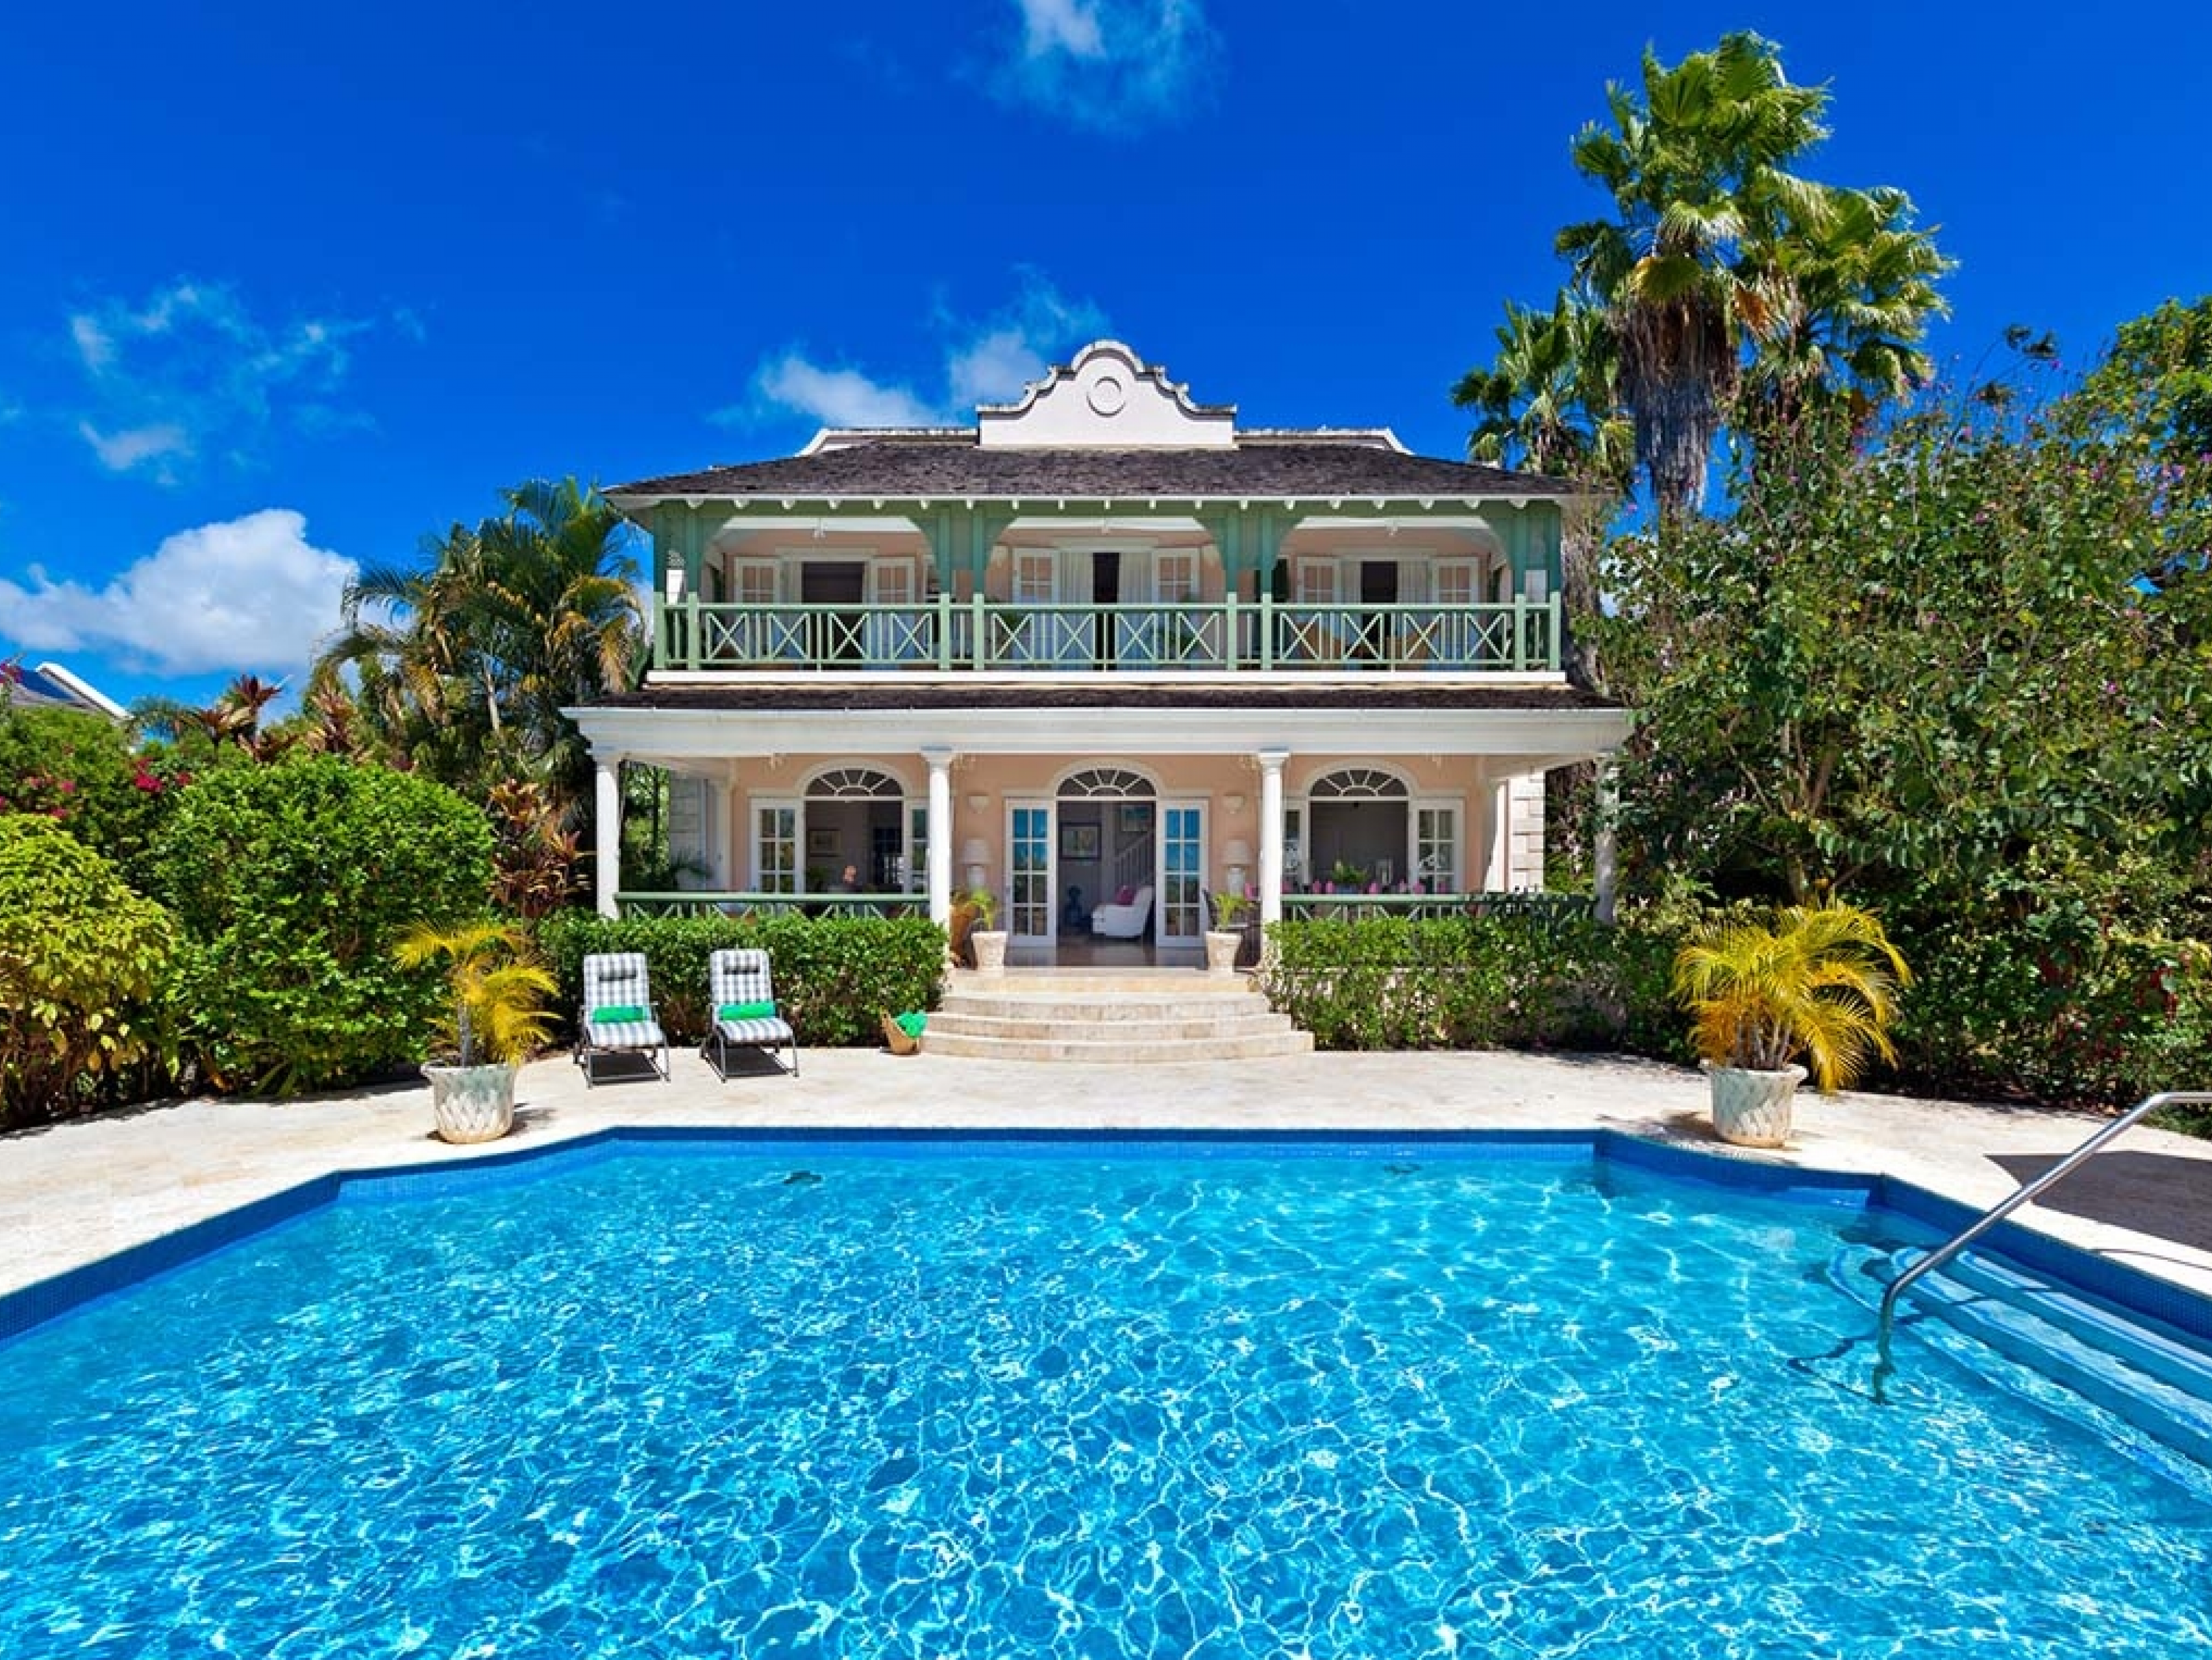 Sugar Hill - Firefly Sugar Hill Resort Barbados rentals with pools